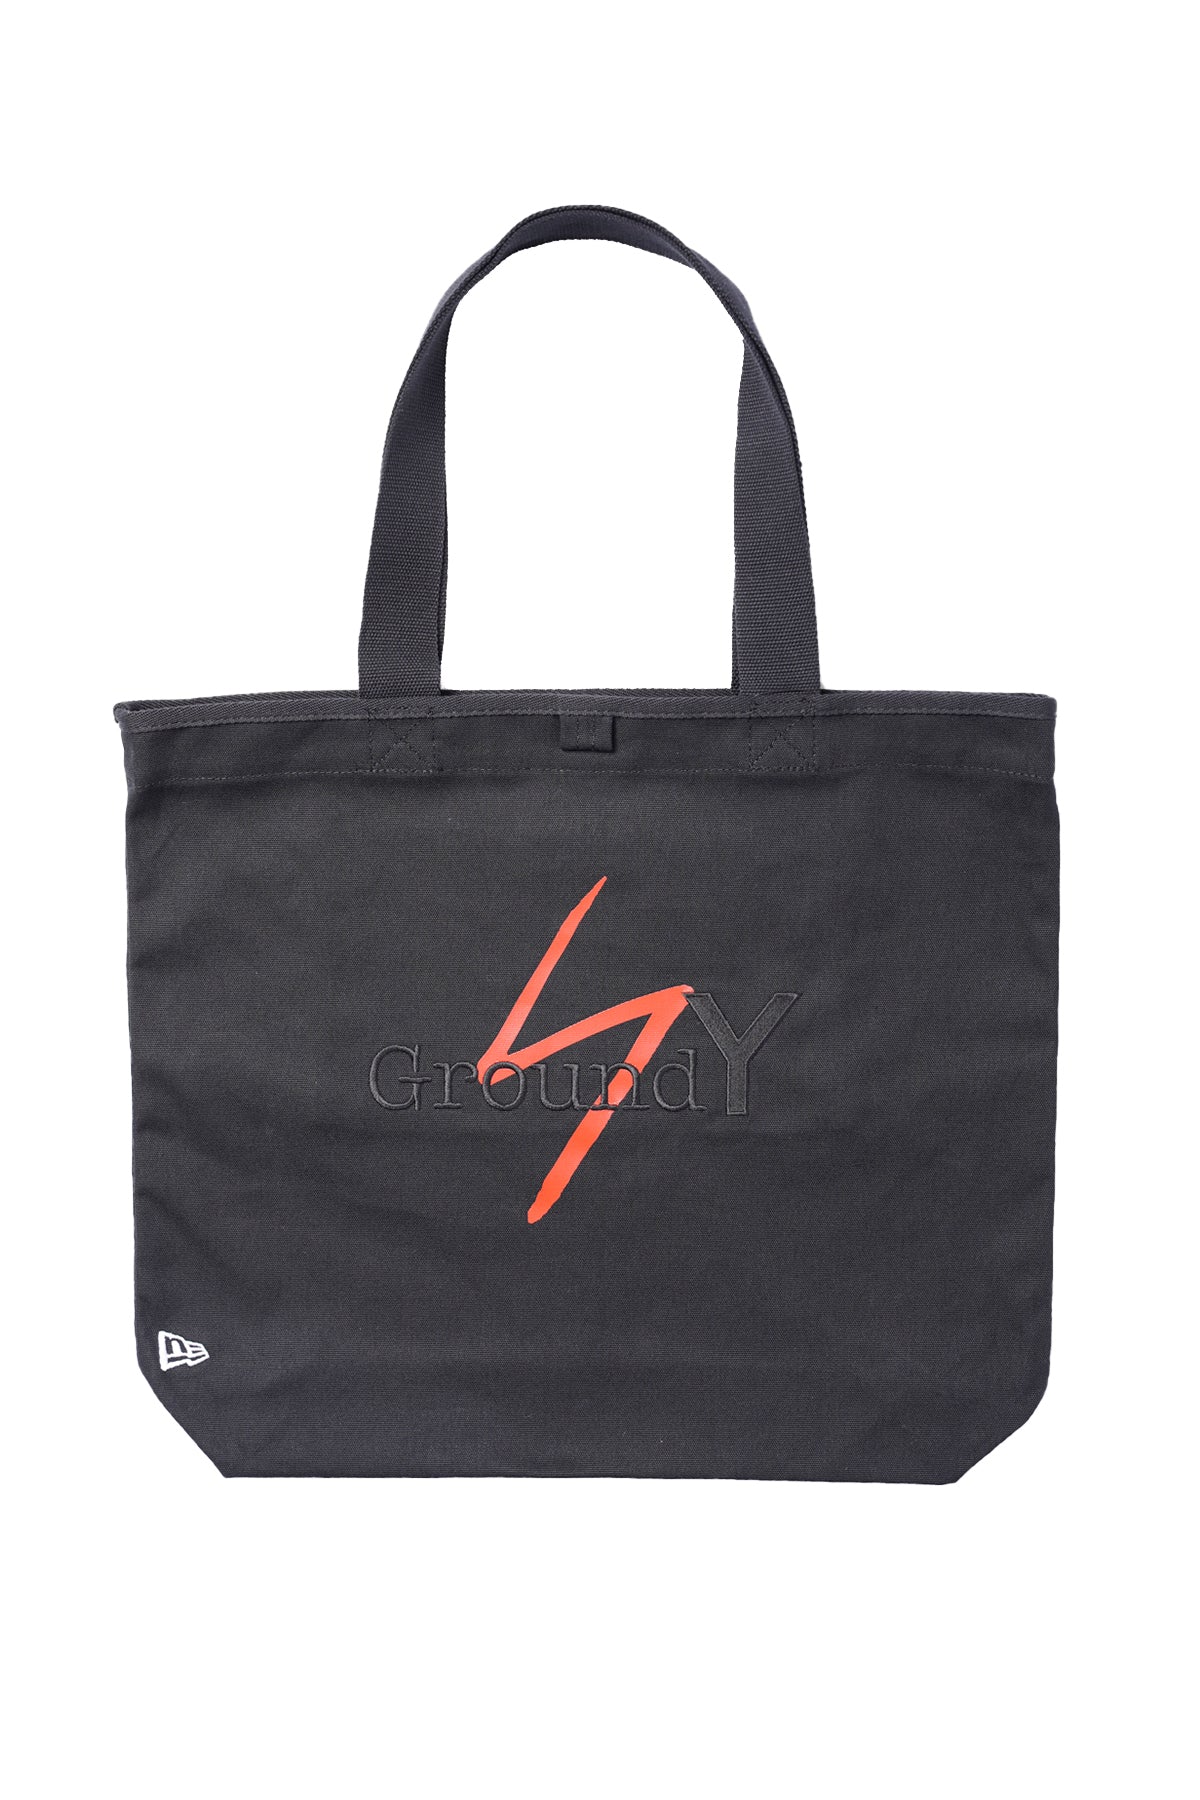 Ground Y × NEW ERA  / Collection Shoulder Bag